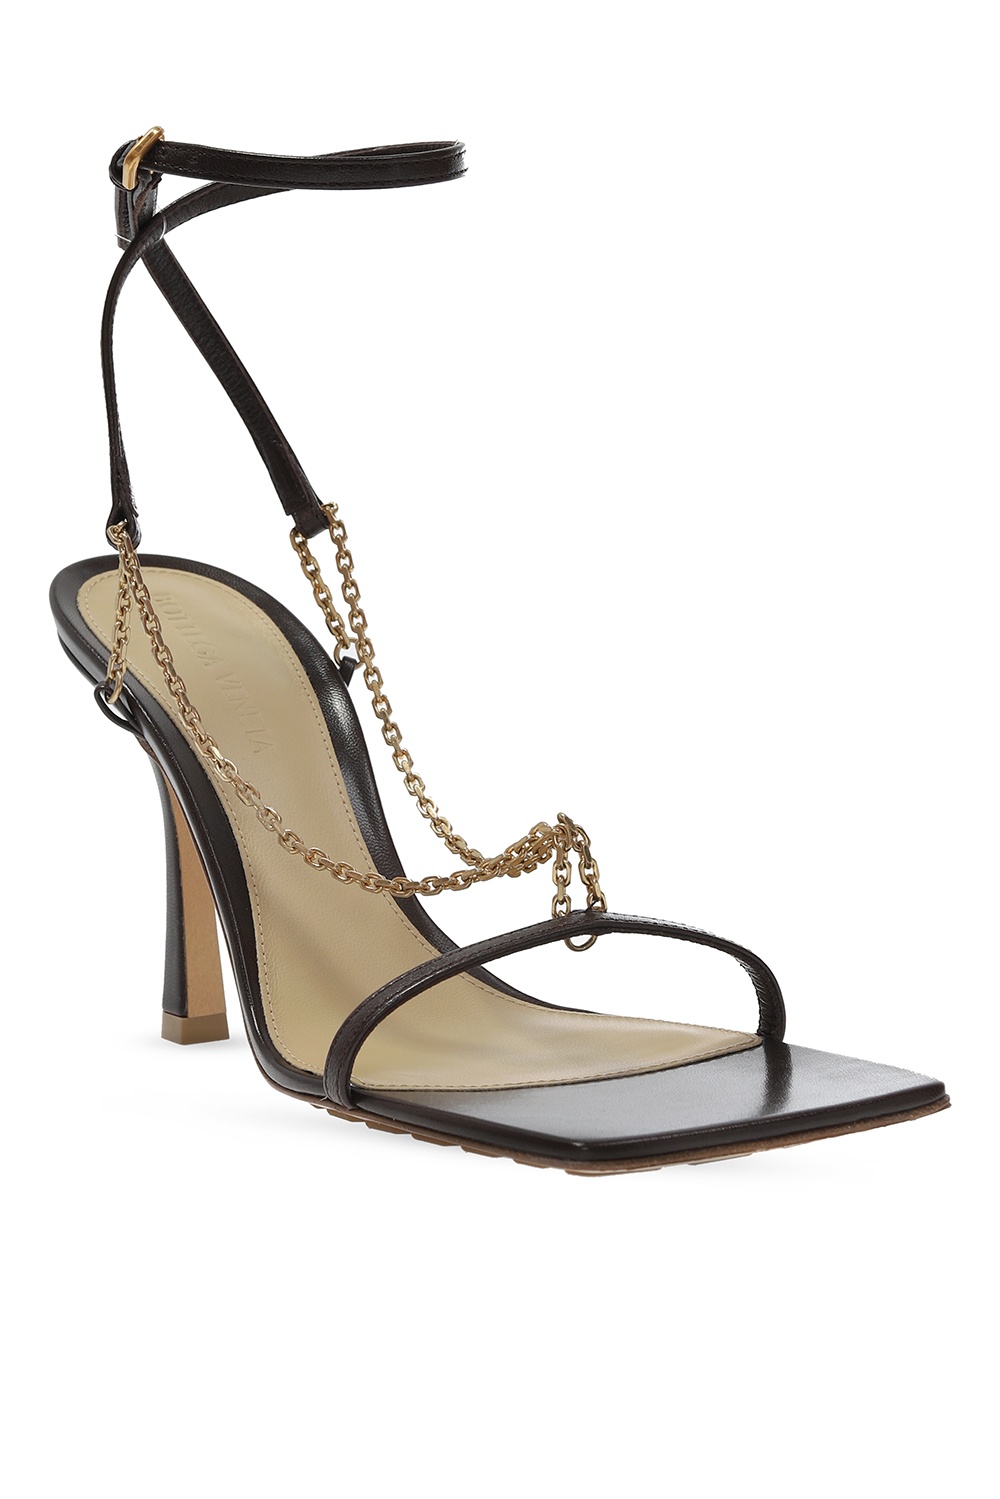 Bottega Veneta ‘Stretch’ heeled sandals